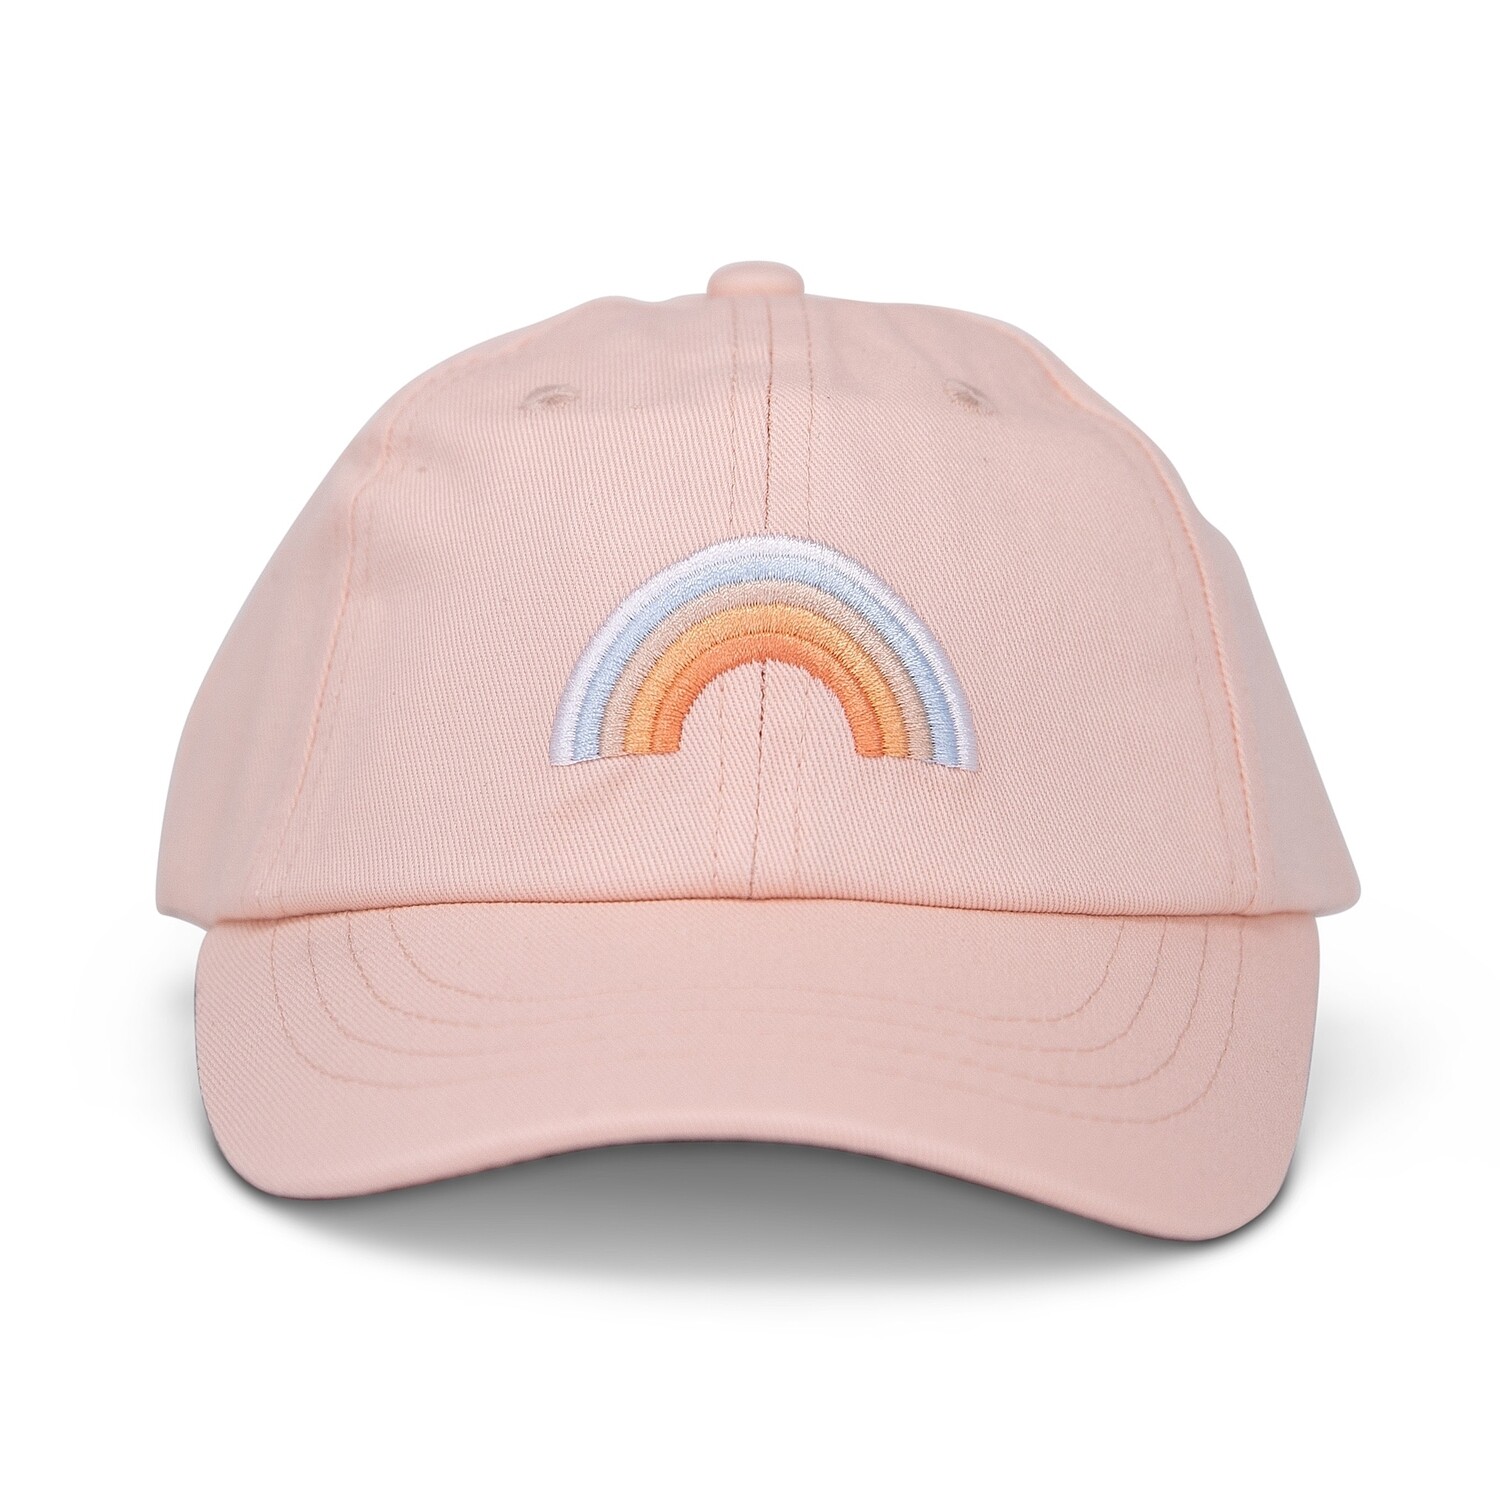 Cash & Co. Blushing Rainbow Hat